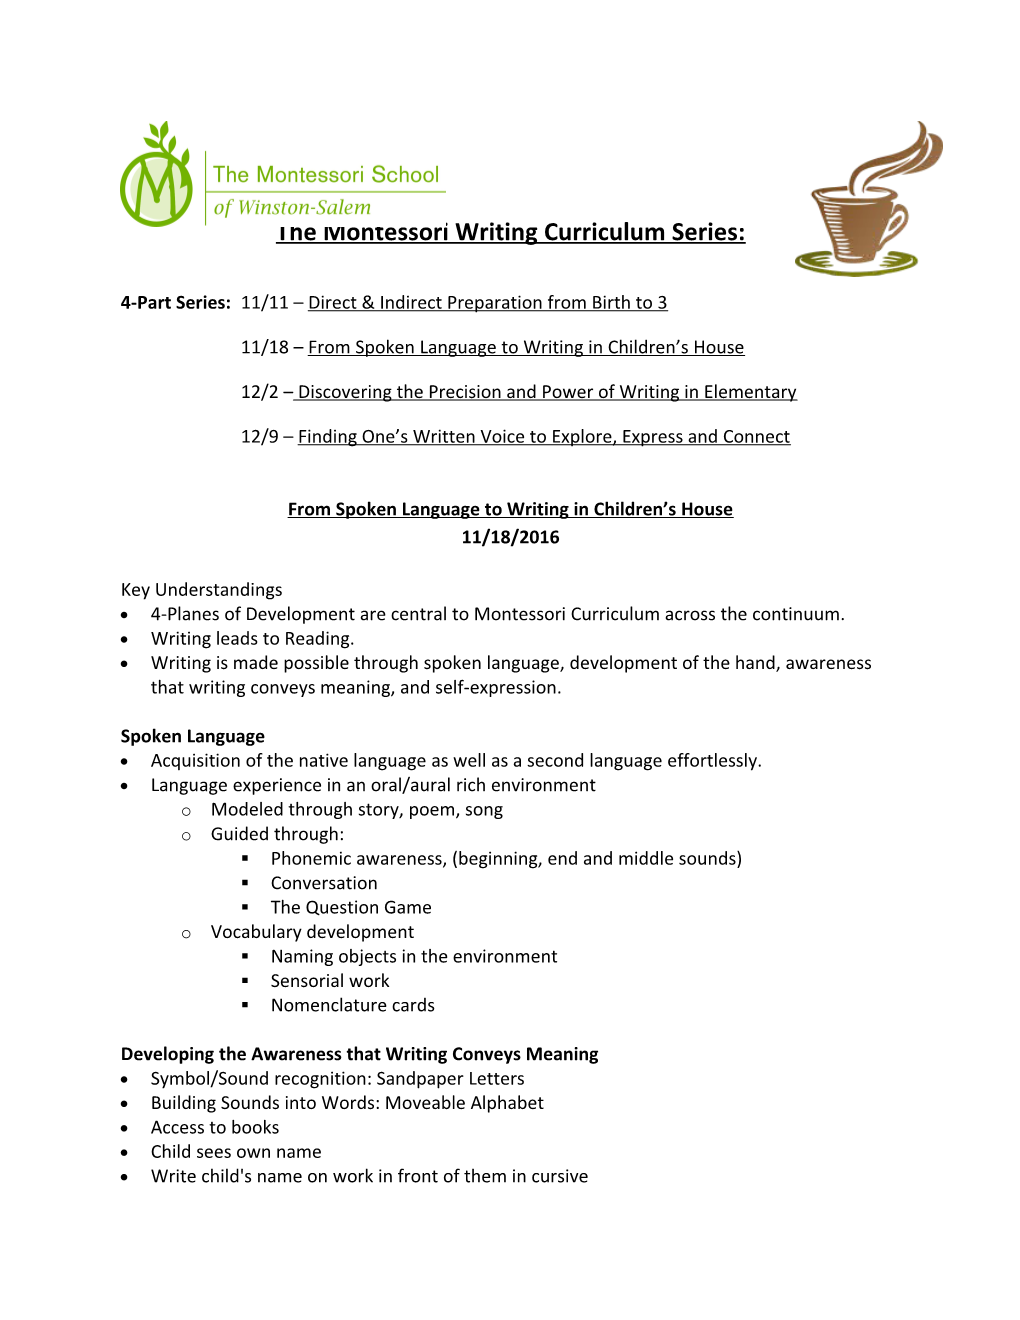 The Montessori Writing Curriculum Series